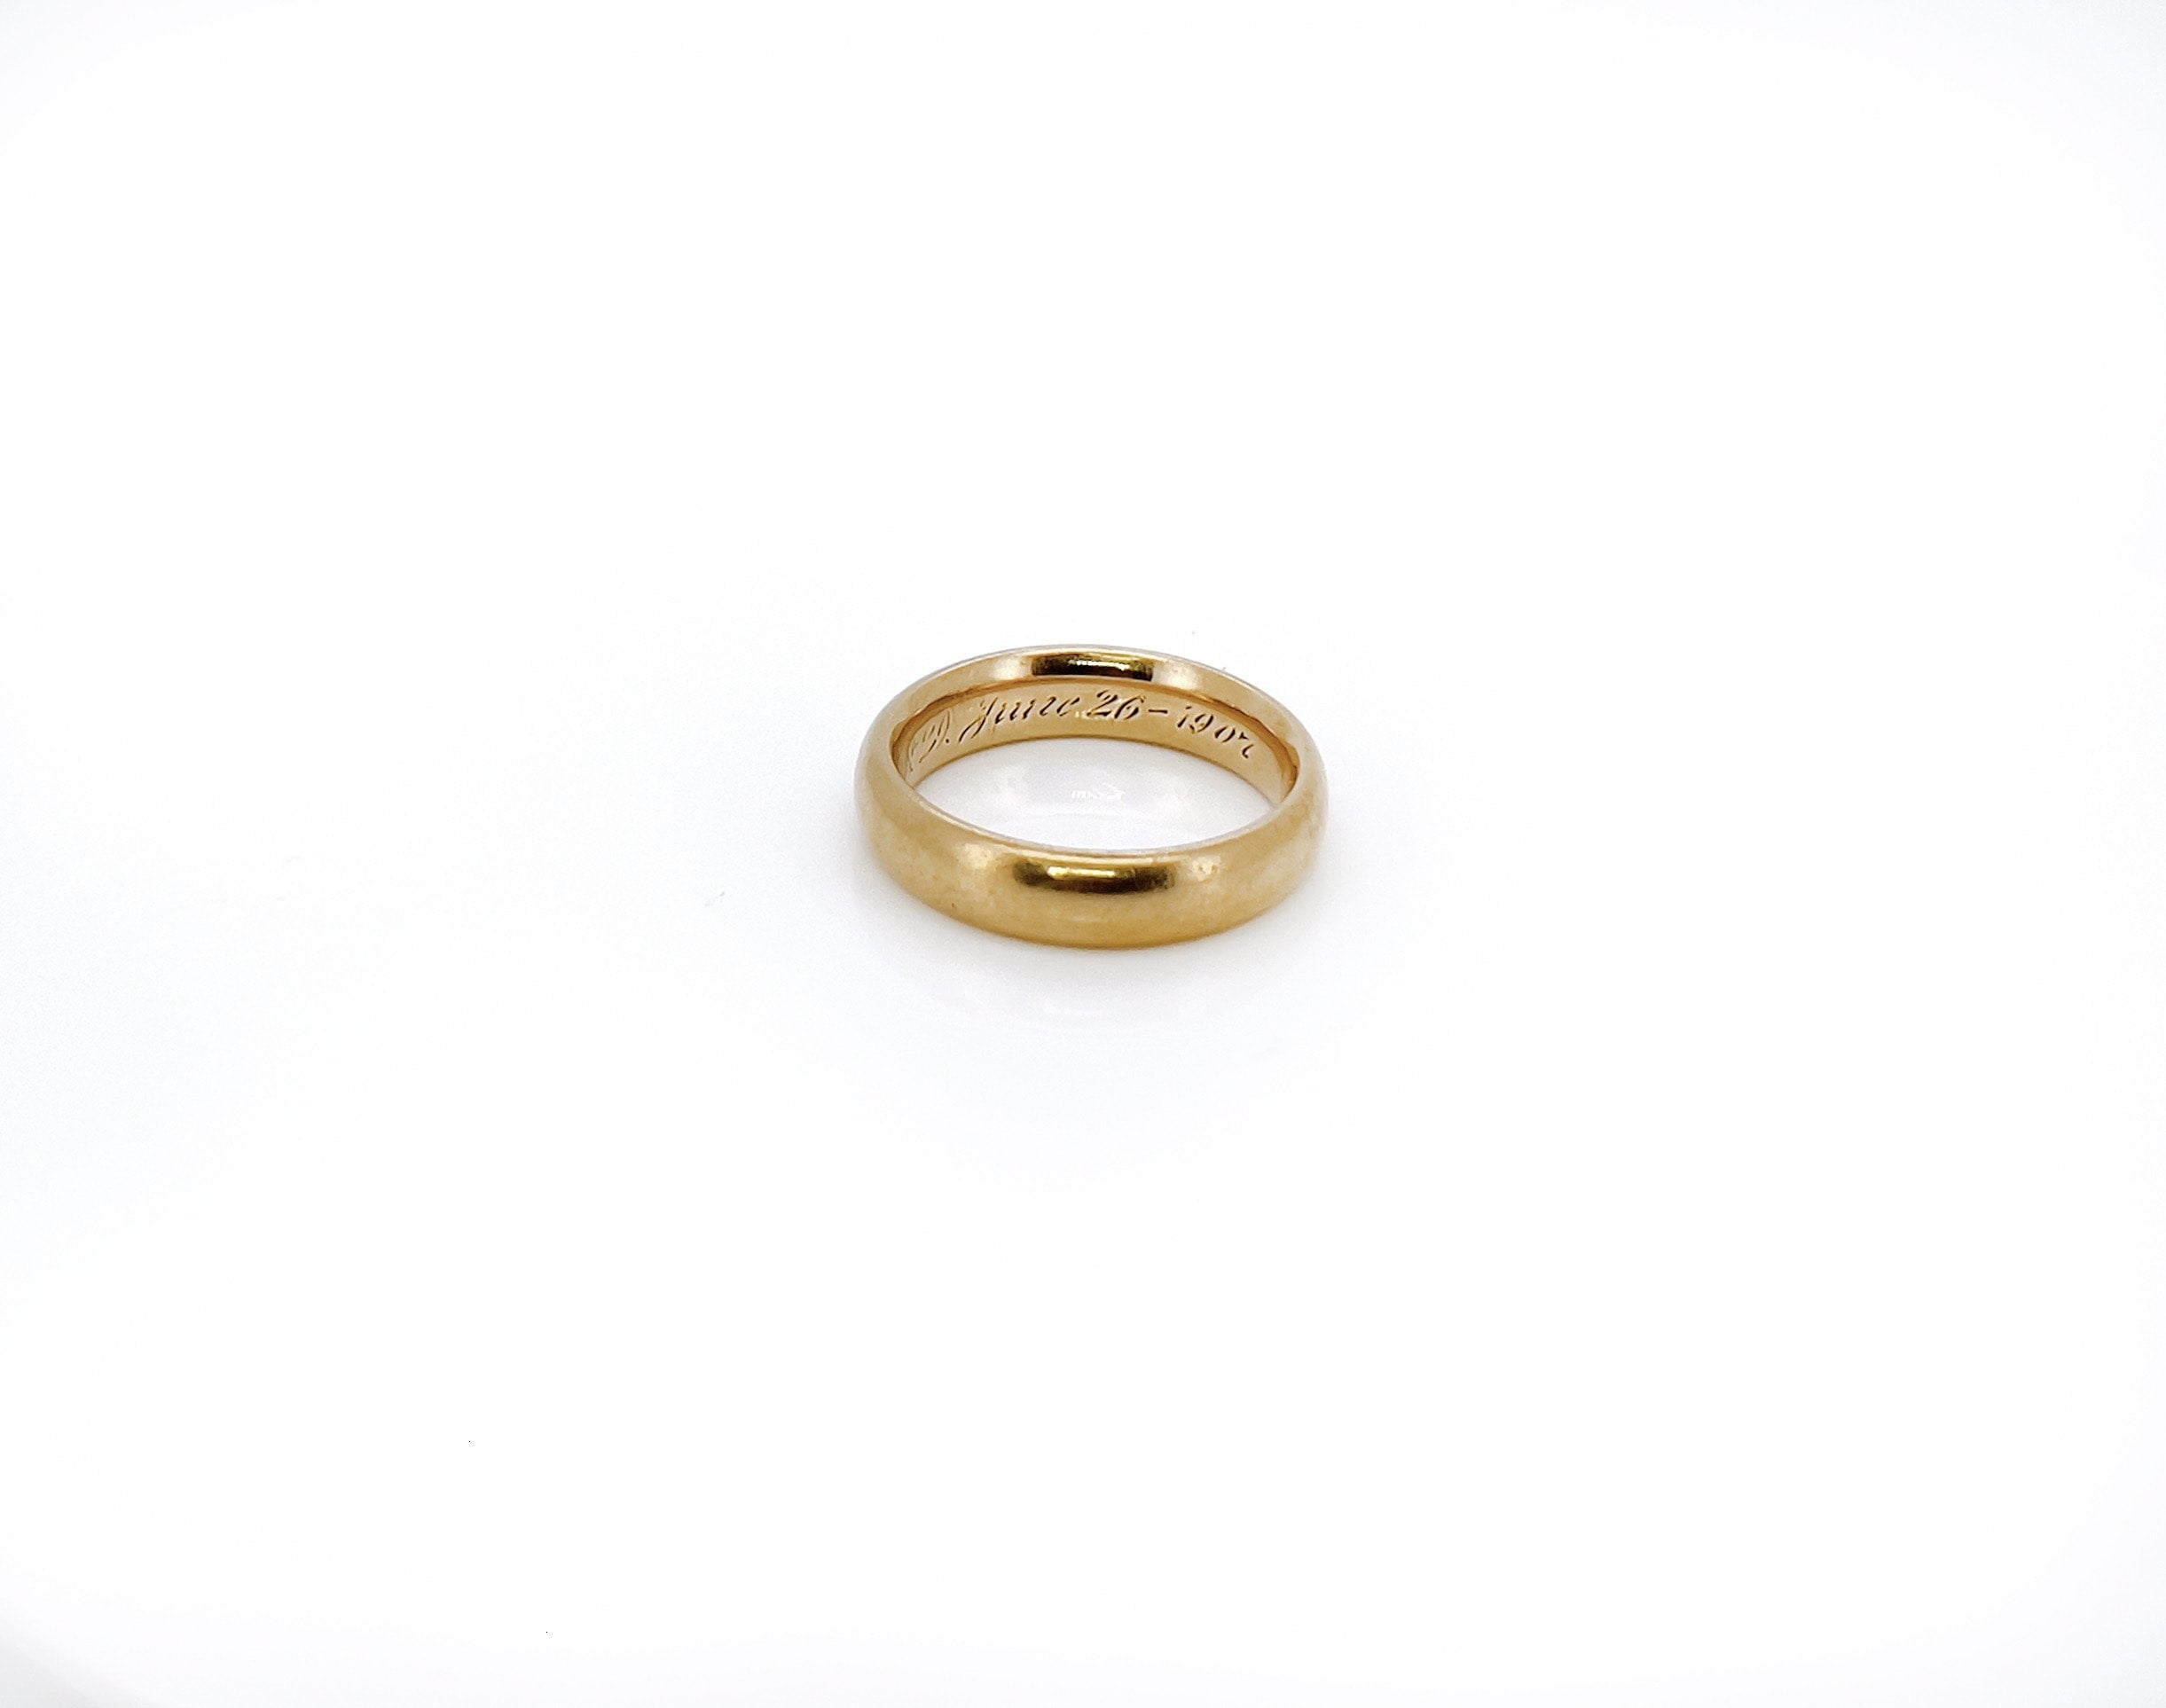 Antique Wedding Ring, W.M.C to M.N.D June 26, 1907, 17K, Size 7